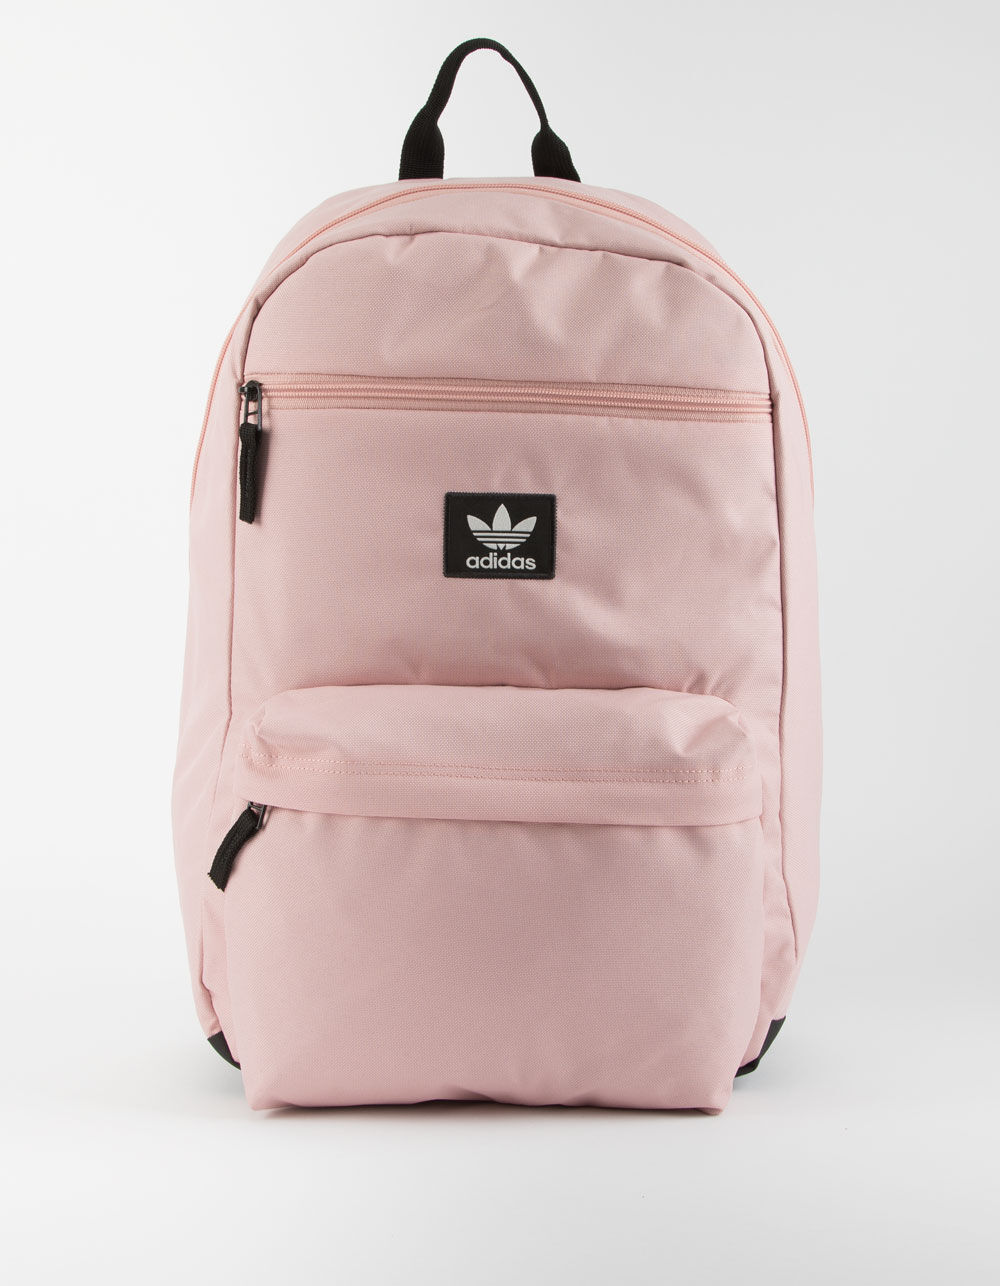 ADIDAS Originals National Pink Spirit Backpack - PINK SPIRIT | Tillys